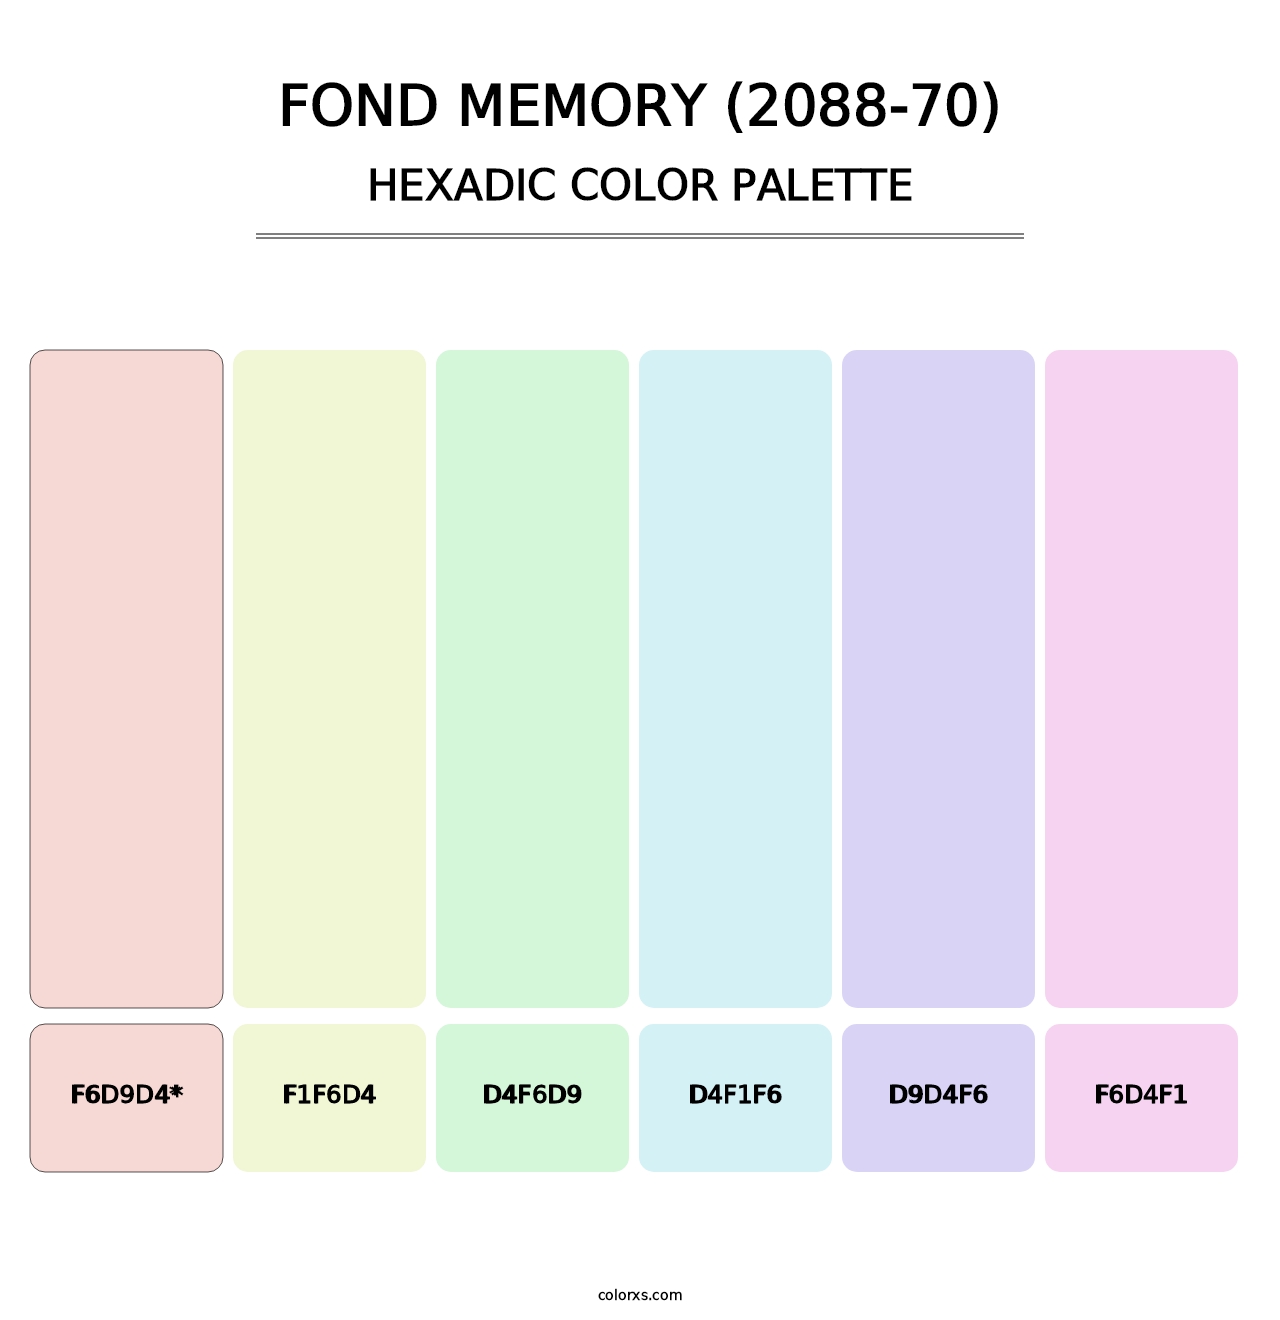 Fond Memory (2088-70) - Hexadic Color Palette